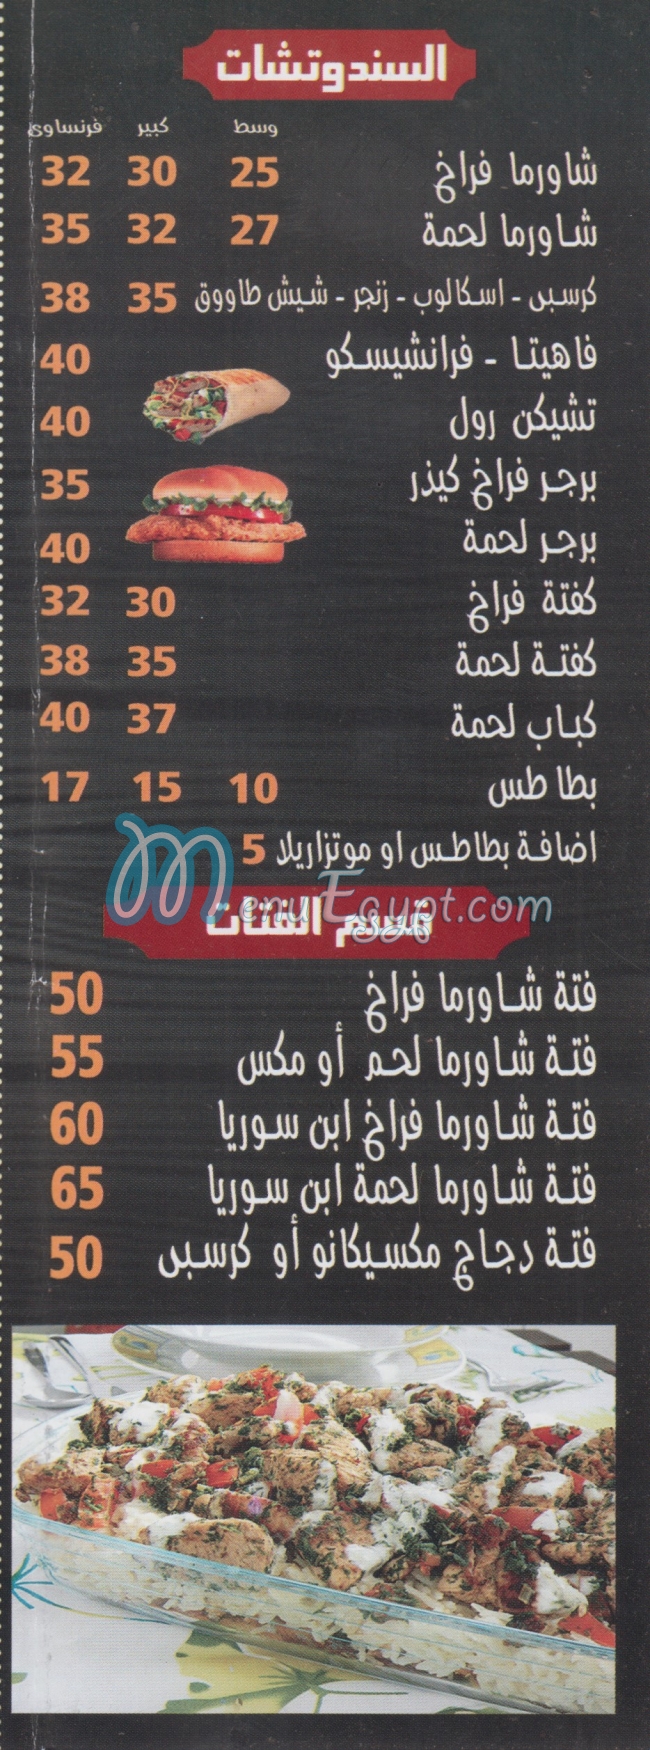 Ibn  Syria menu prices